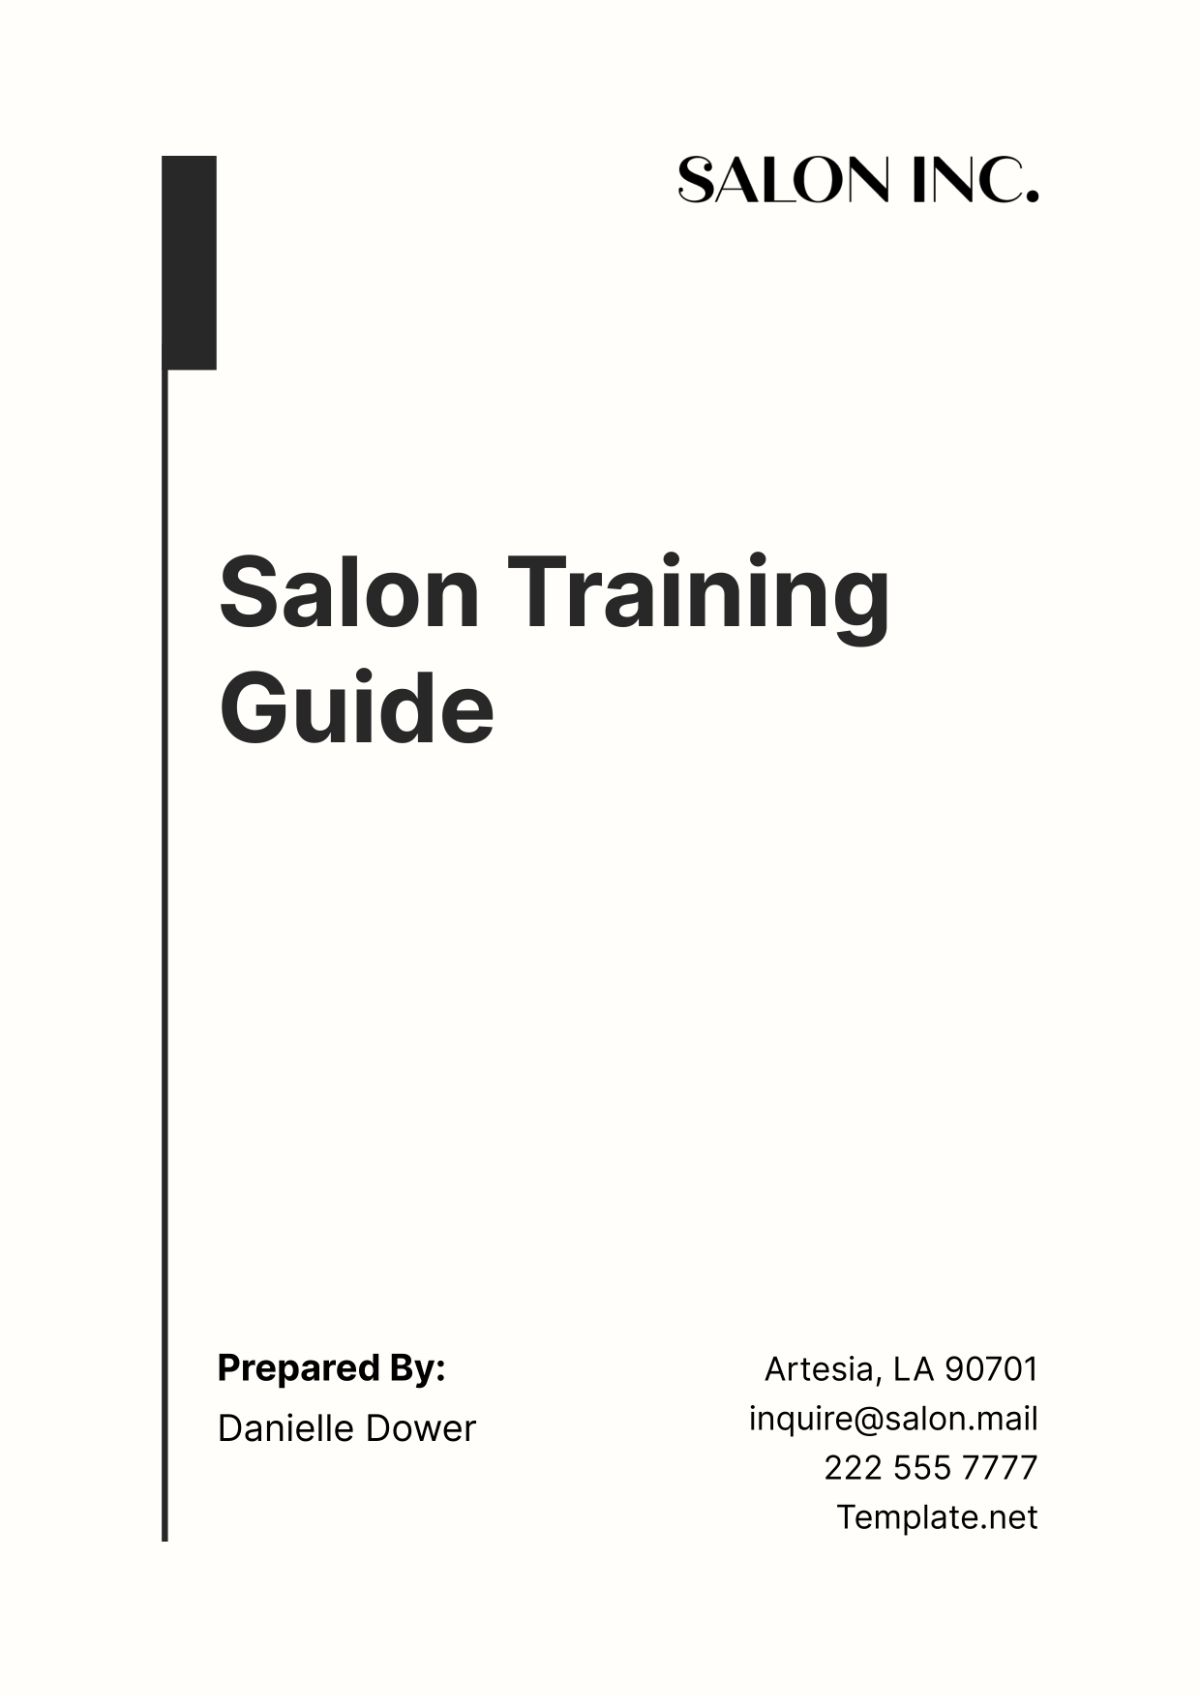 Salon Training Guide Template